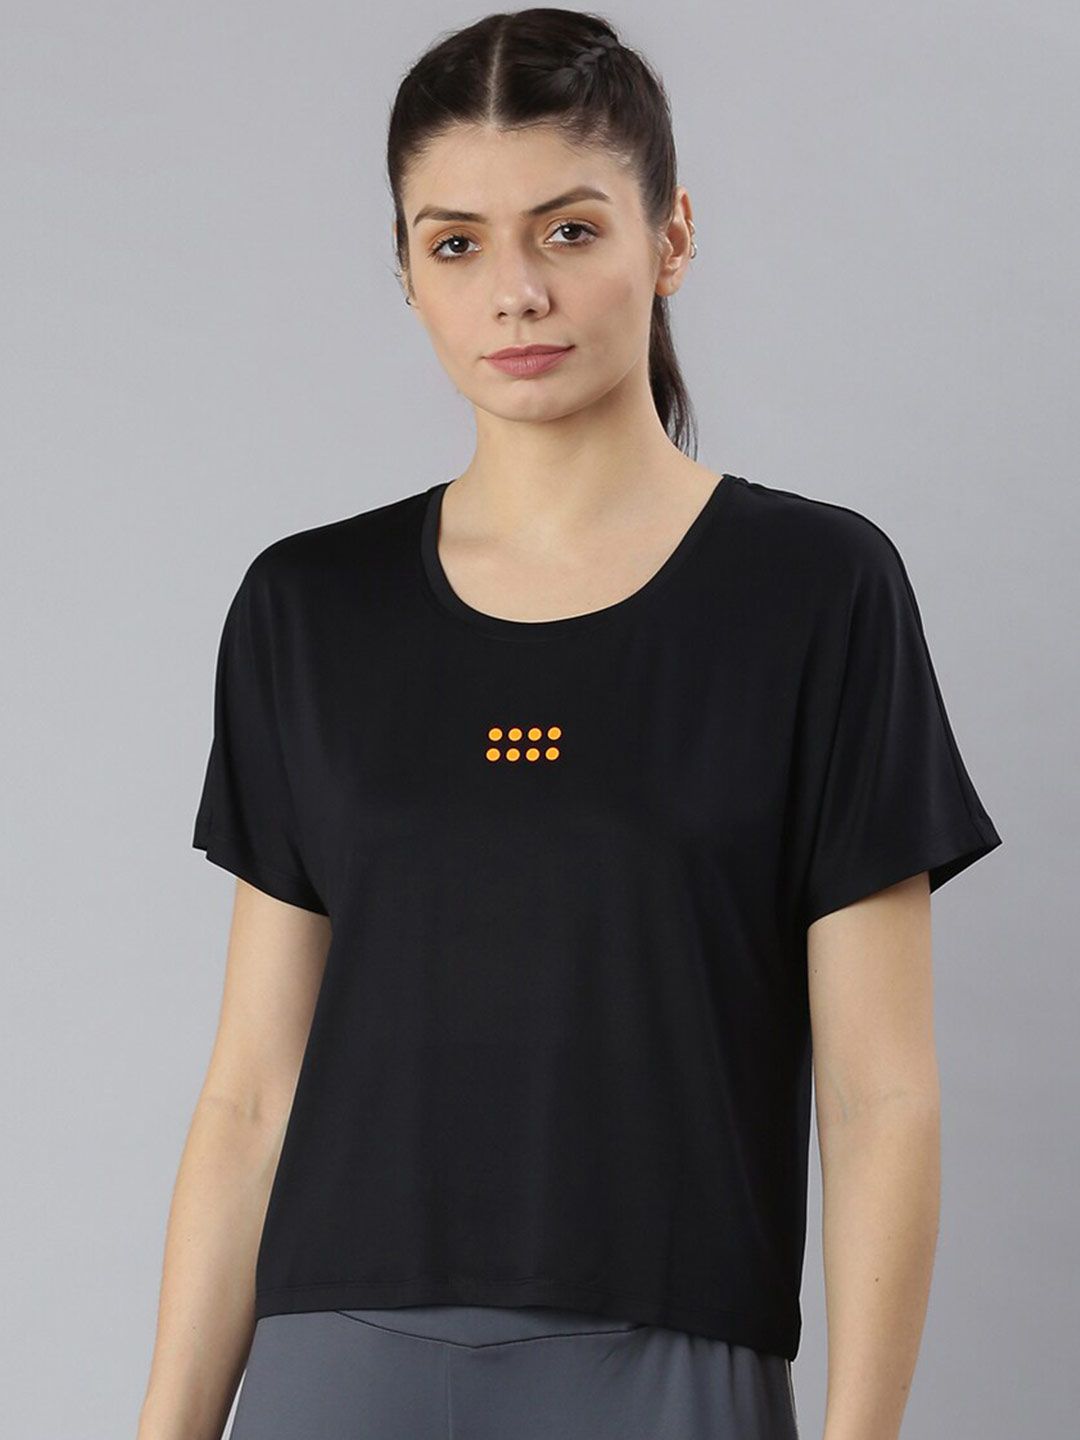 MKH Women Black Dri-FIT T-shirt Price in India